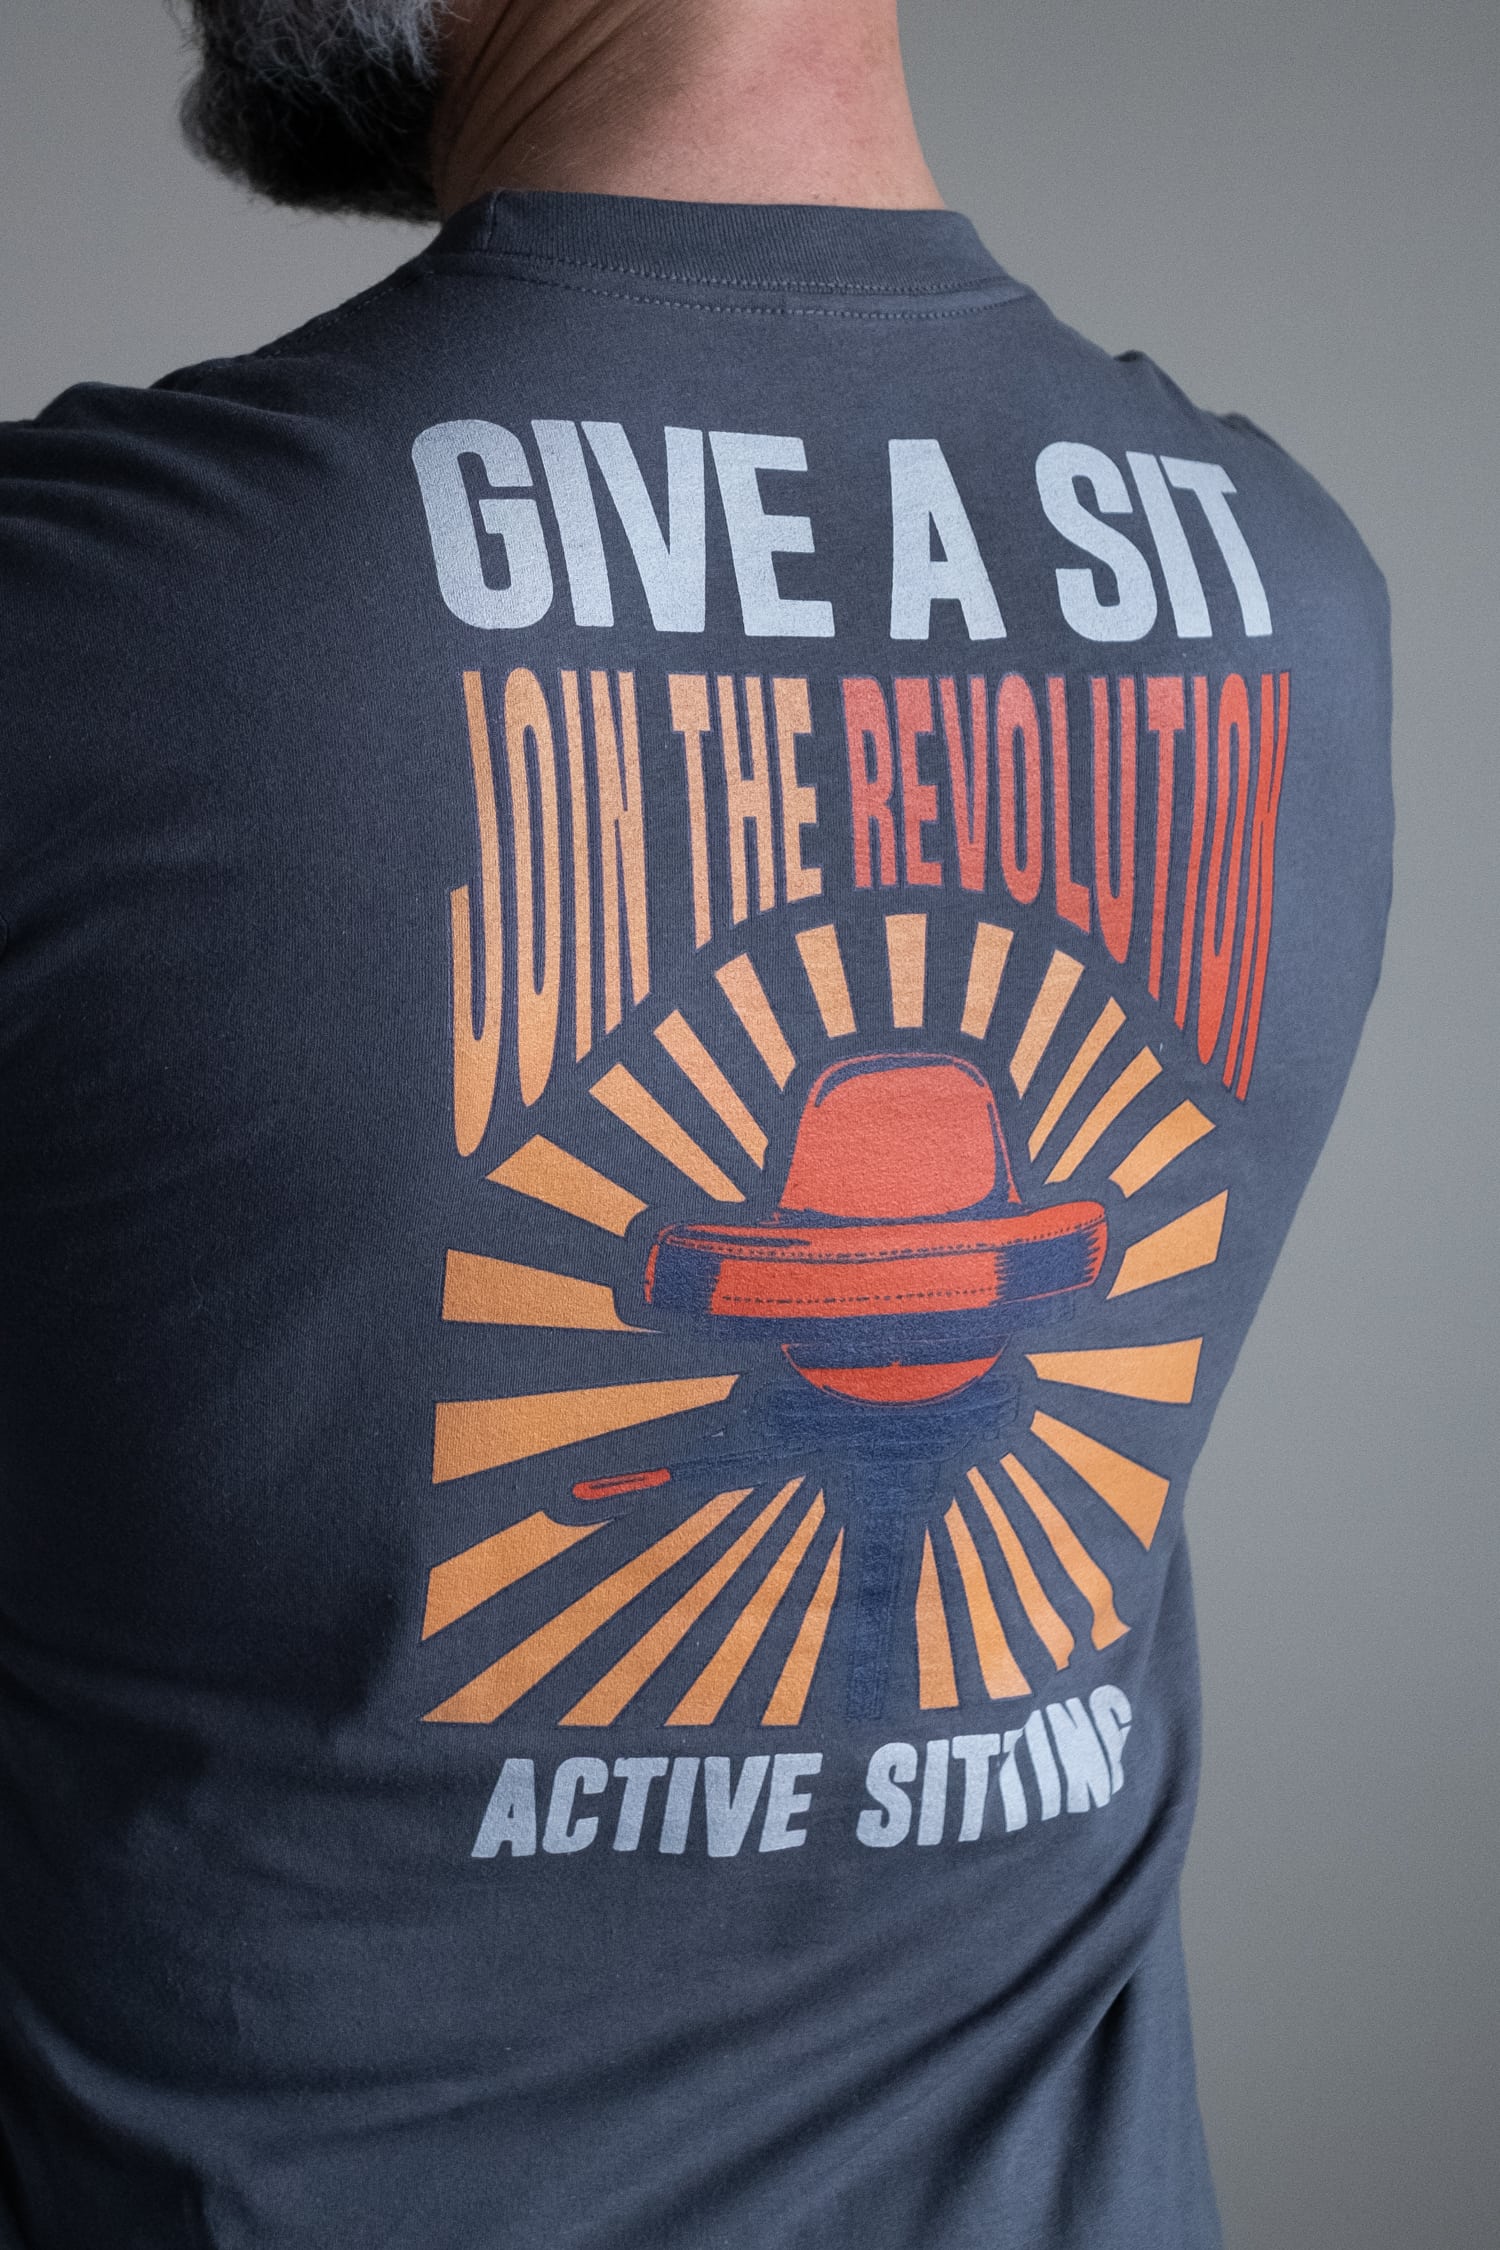 man wearing "give a sit" t-shirt